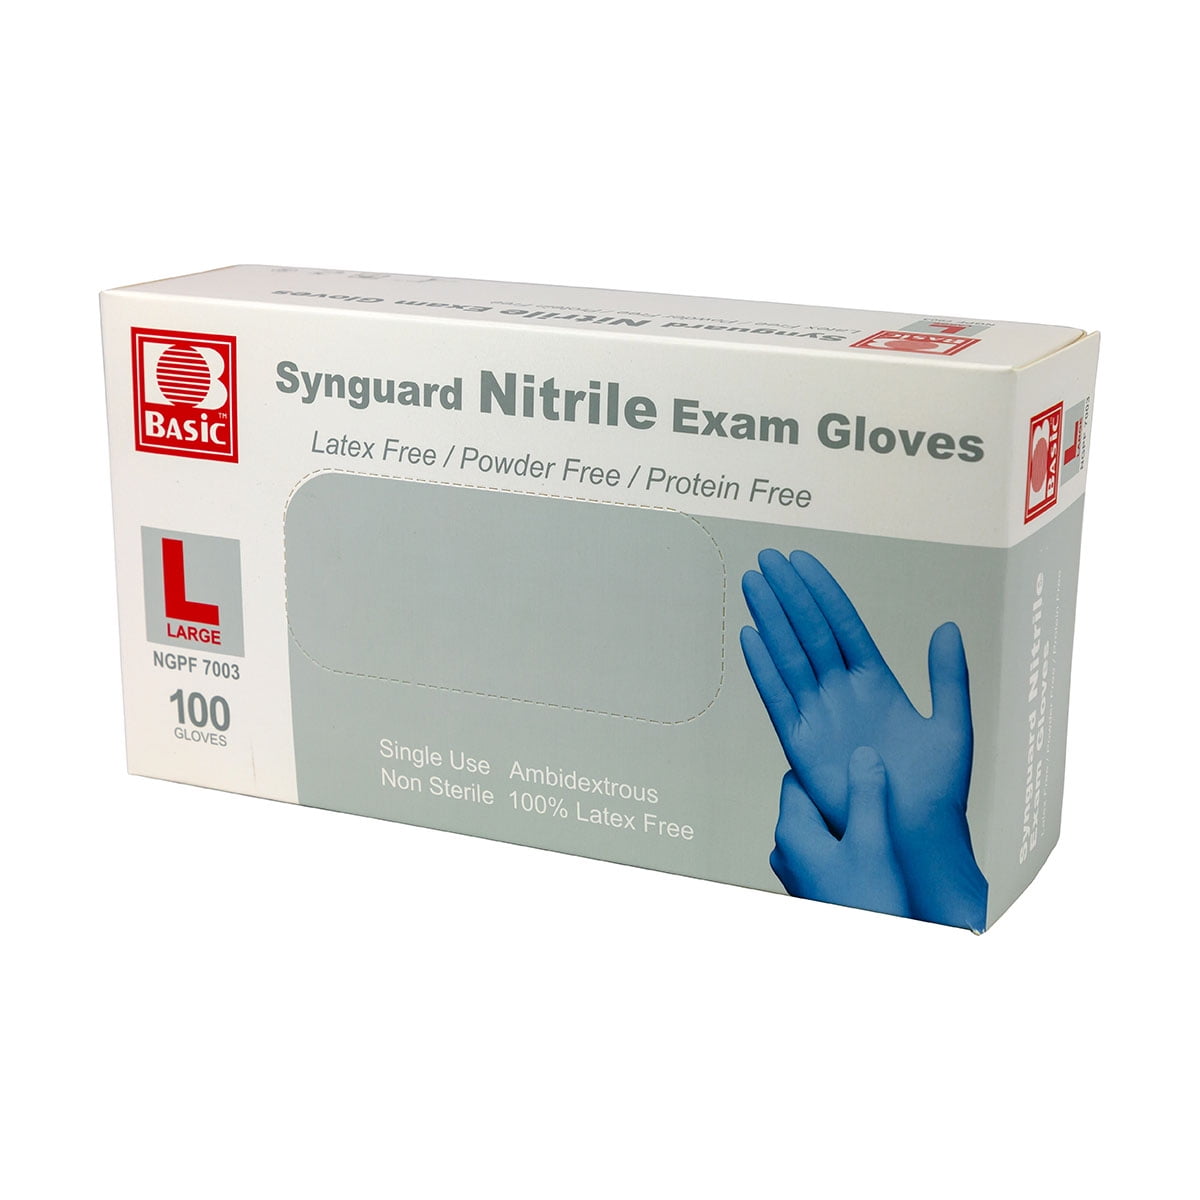 Basic Synguard–Disposable Nitrile Gloves Box of 100 |Powder Free Non-Sterile Ambidextrous| 3.1 Mil Blue 